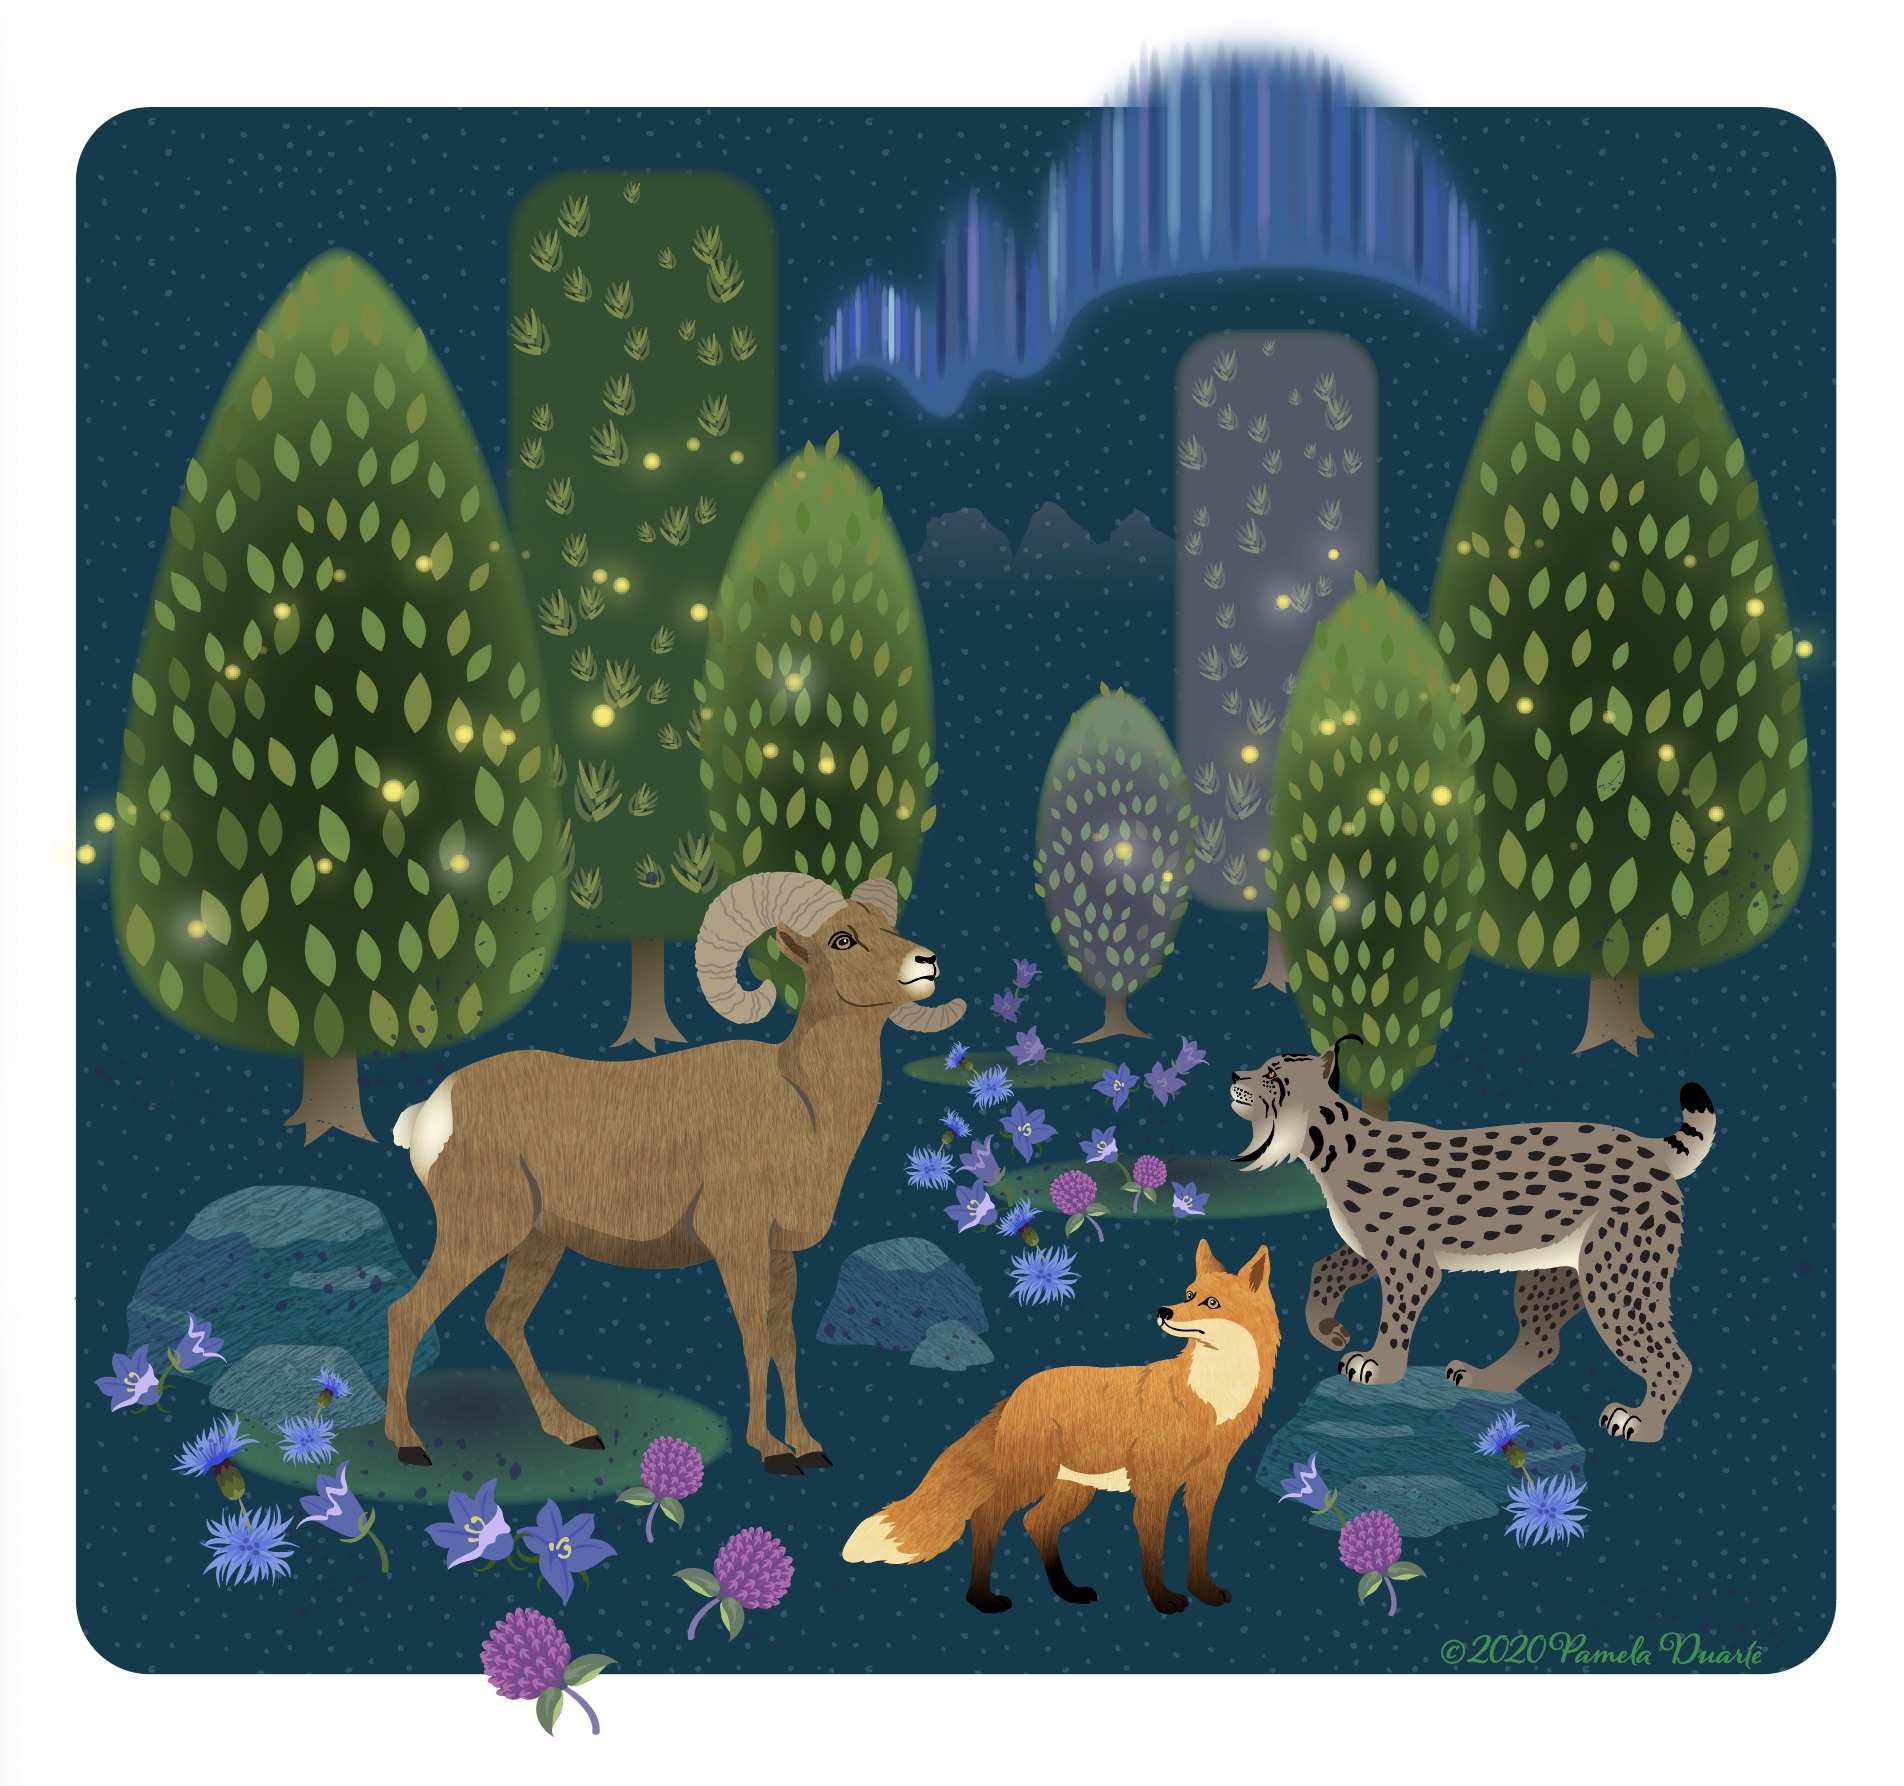 Pamela Duarte Illustration Northern Magic with animals